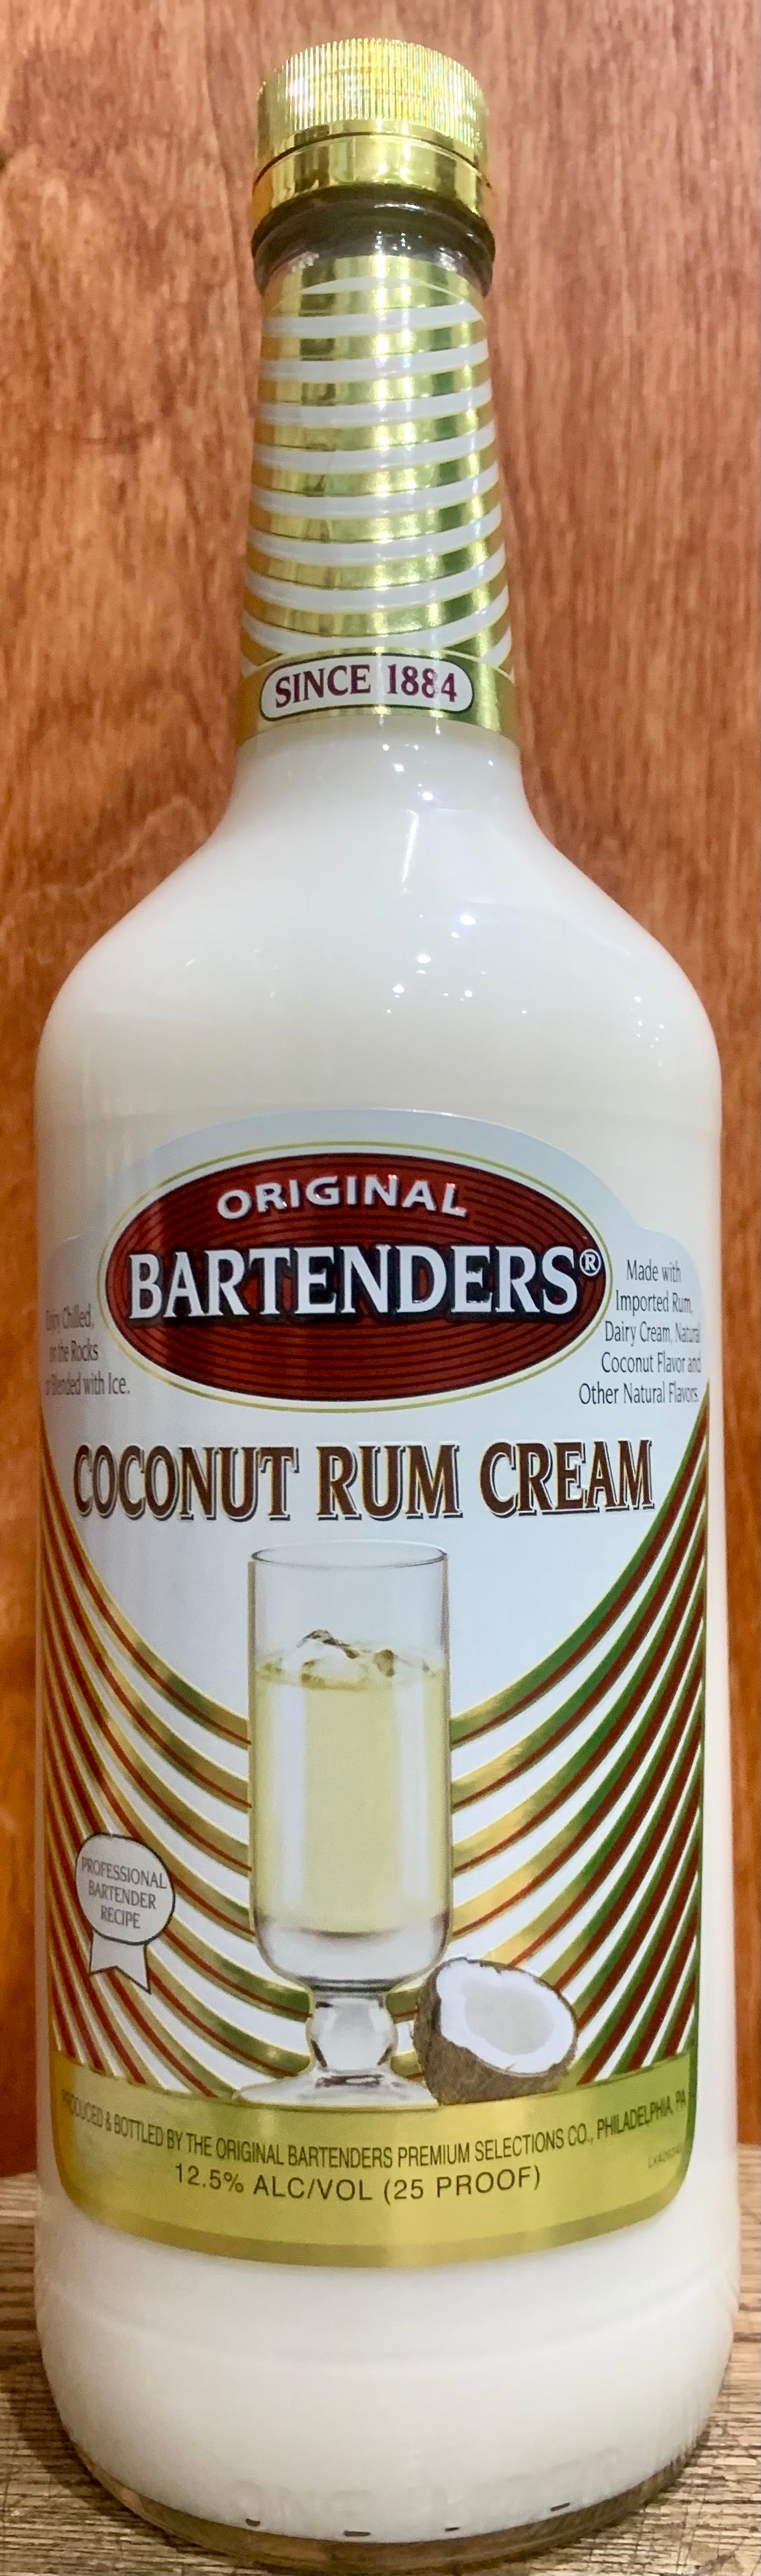 ORIGINAL BARTENDERS COCKTAILS COCONUT RUM CREAM - Bk Wine Depot Corp